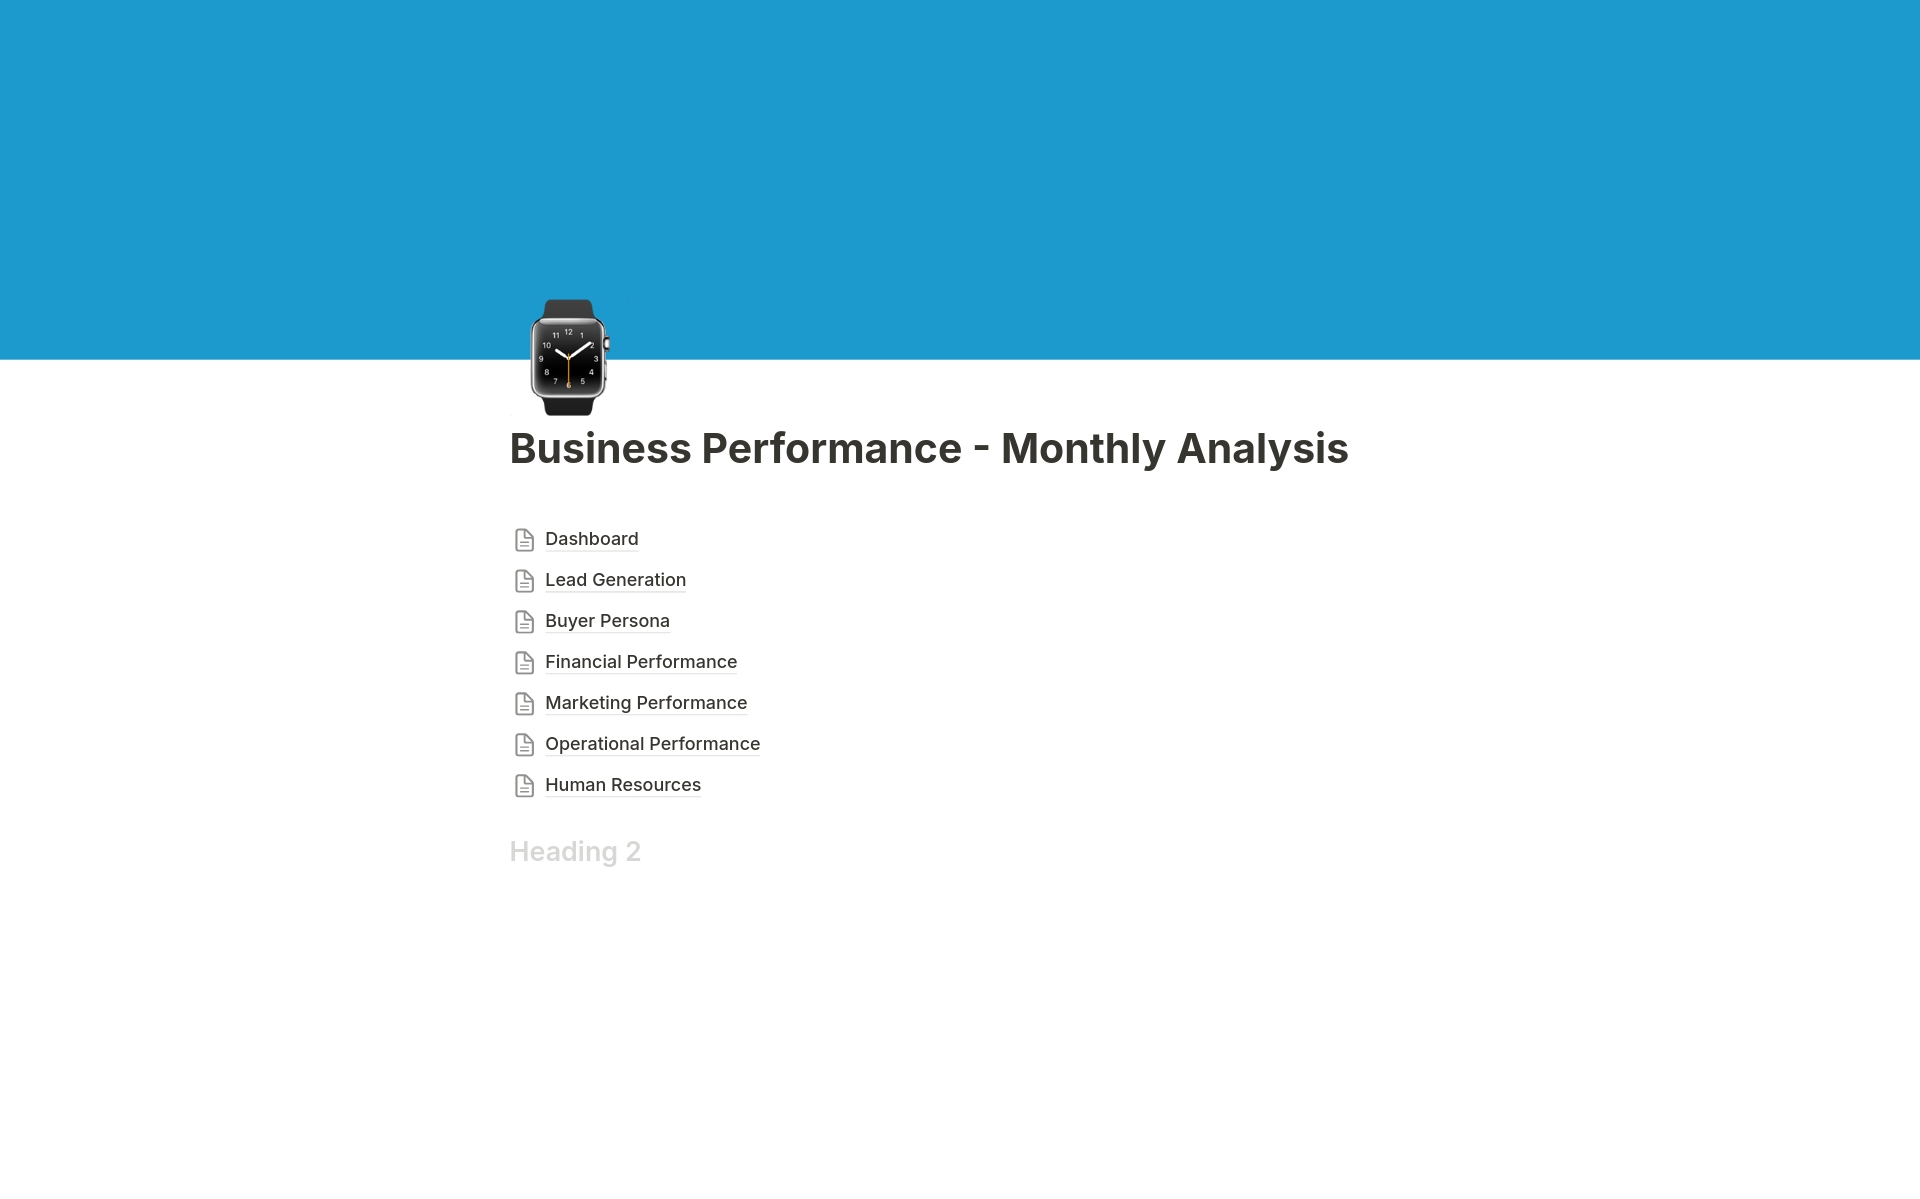 Vista previa de una plantilla para Business Performance Analysis